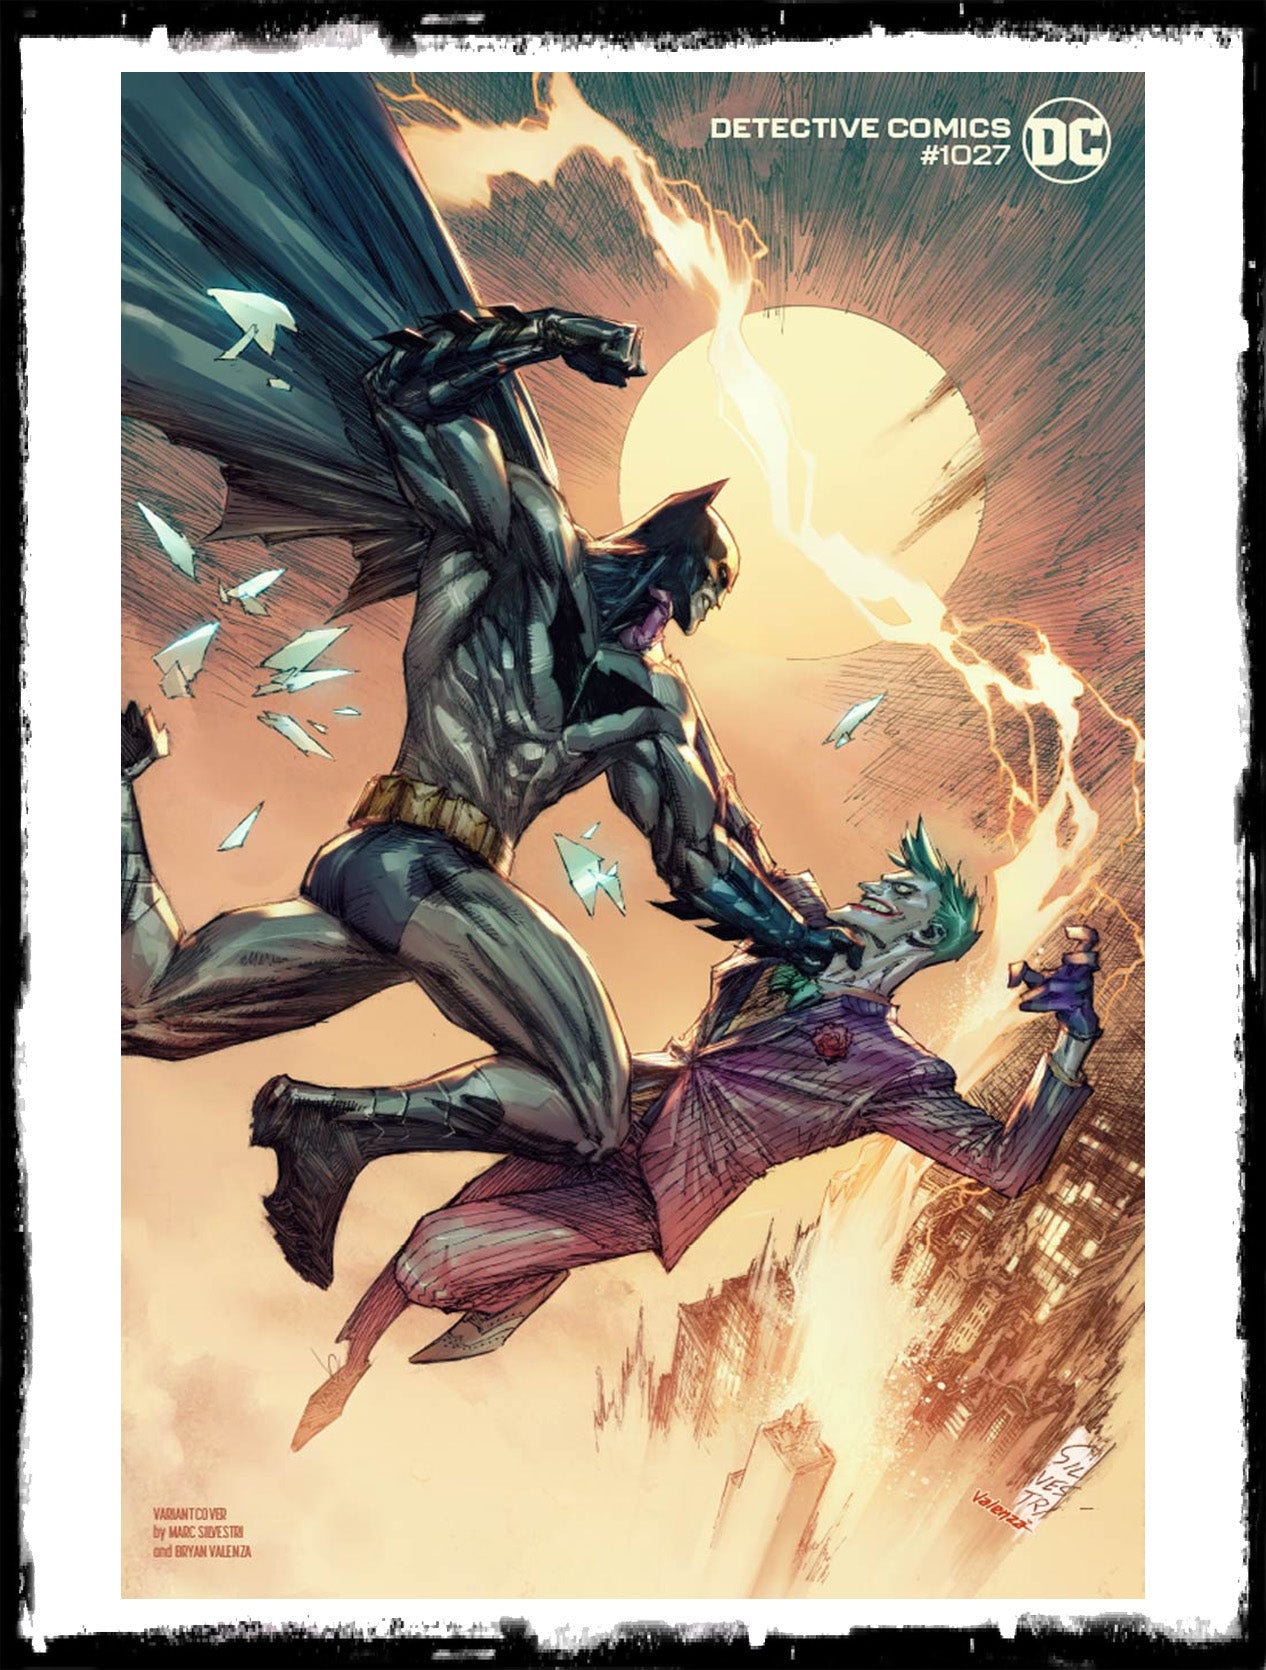 DETECTIVE COMICS - #1027 MARC SILVESTRI BATMAN & JOKER COVER (2020 - NM)